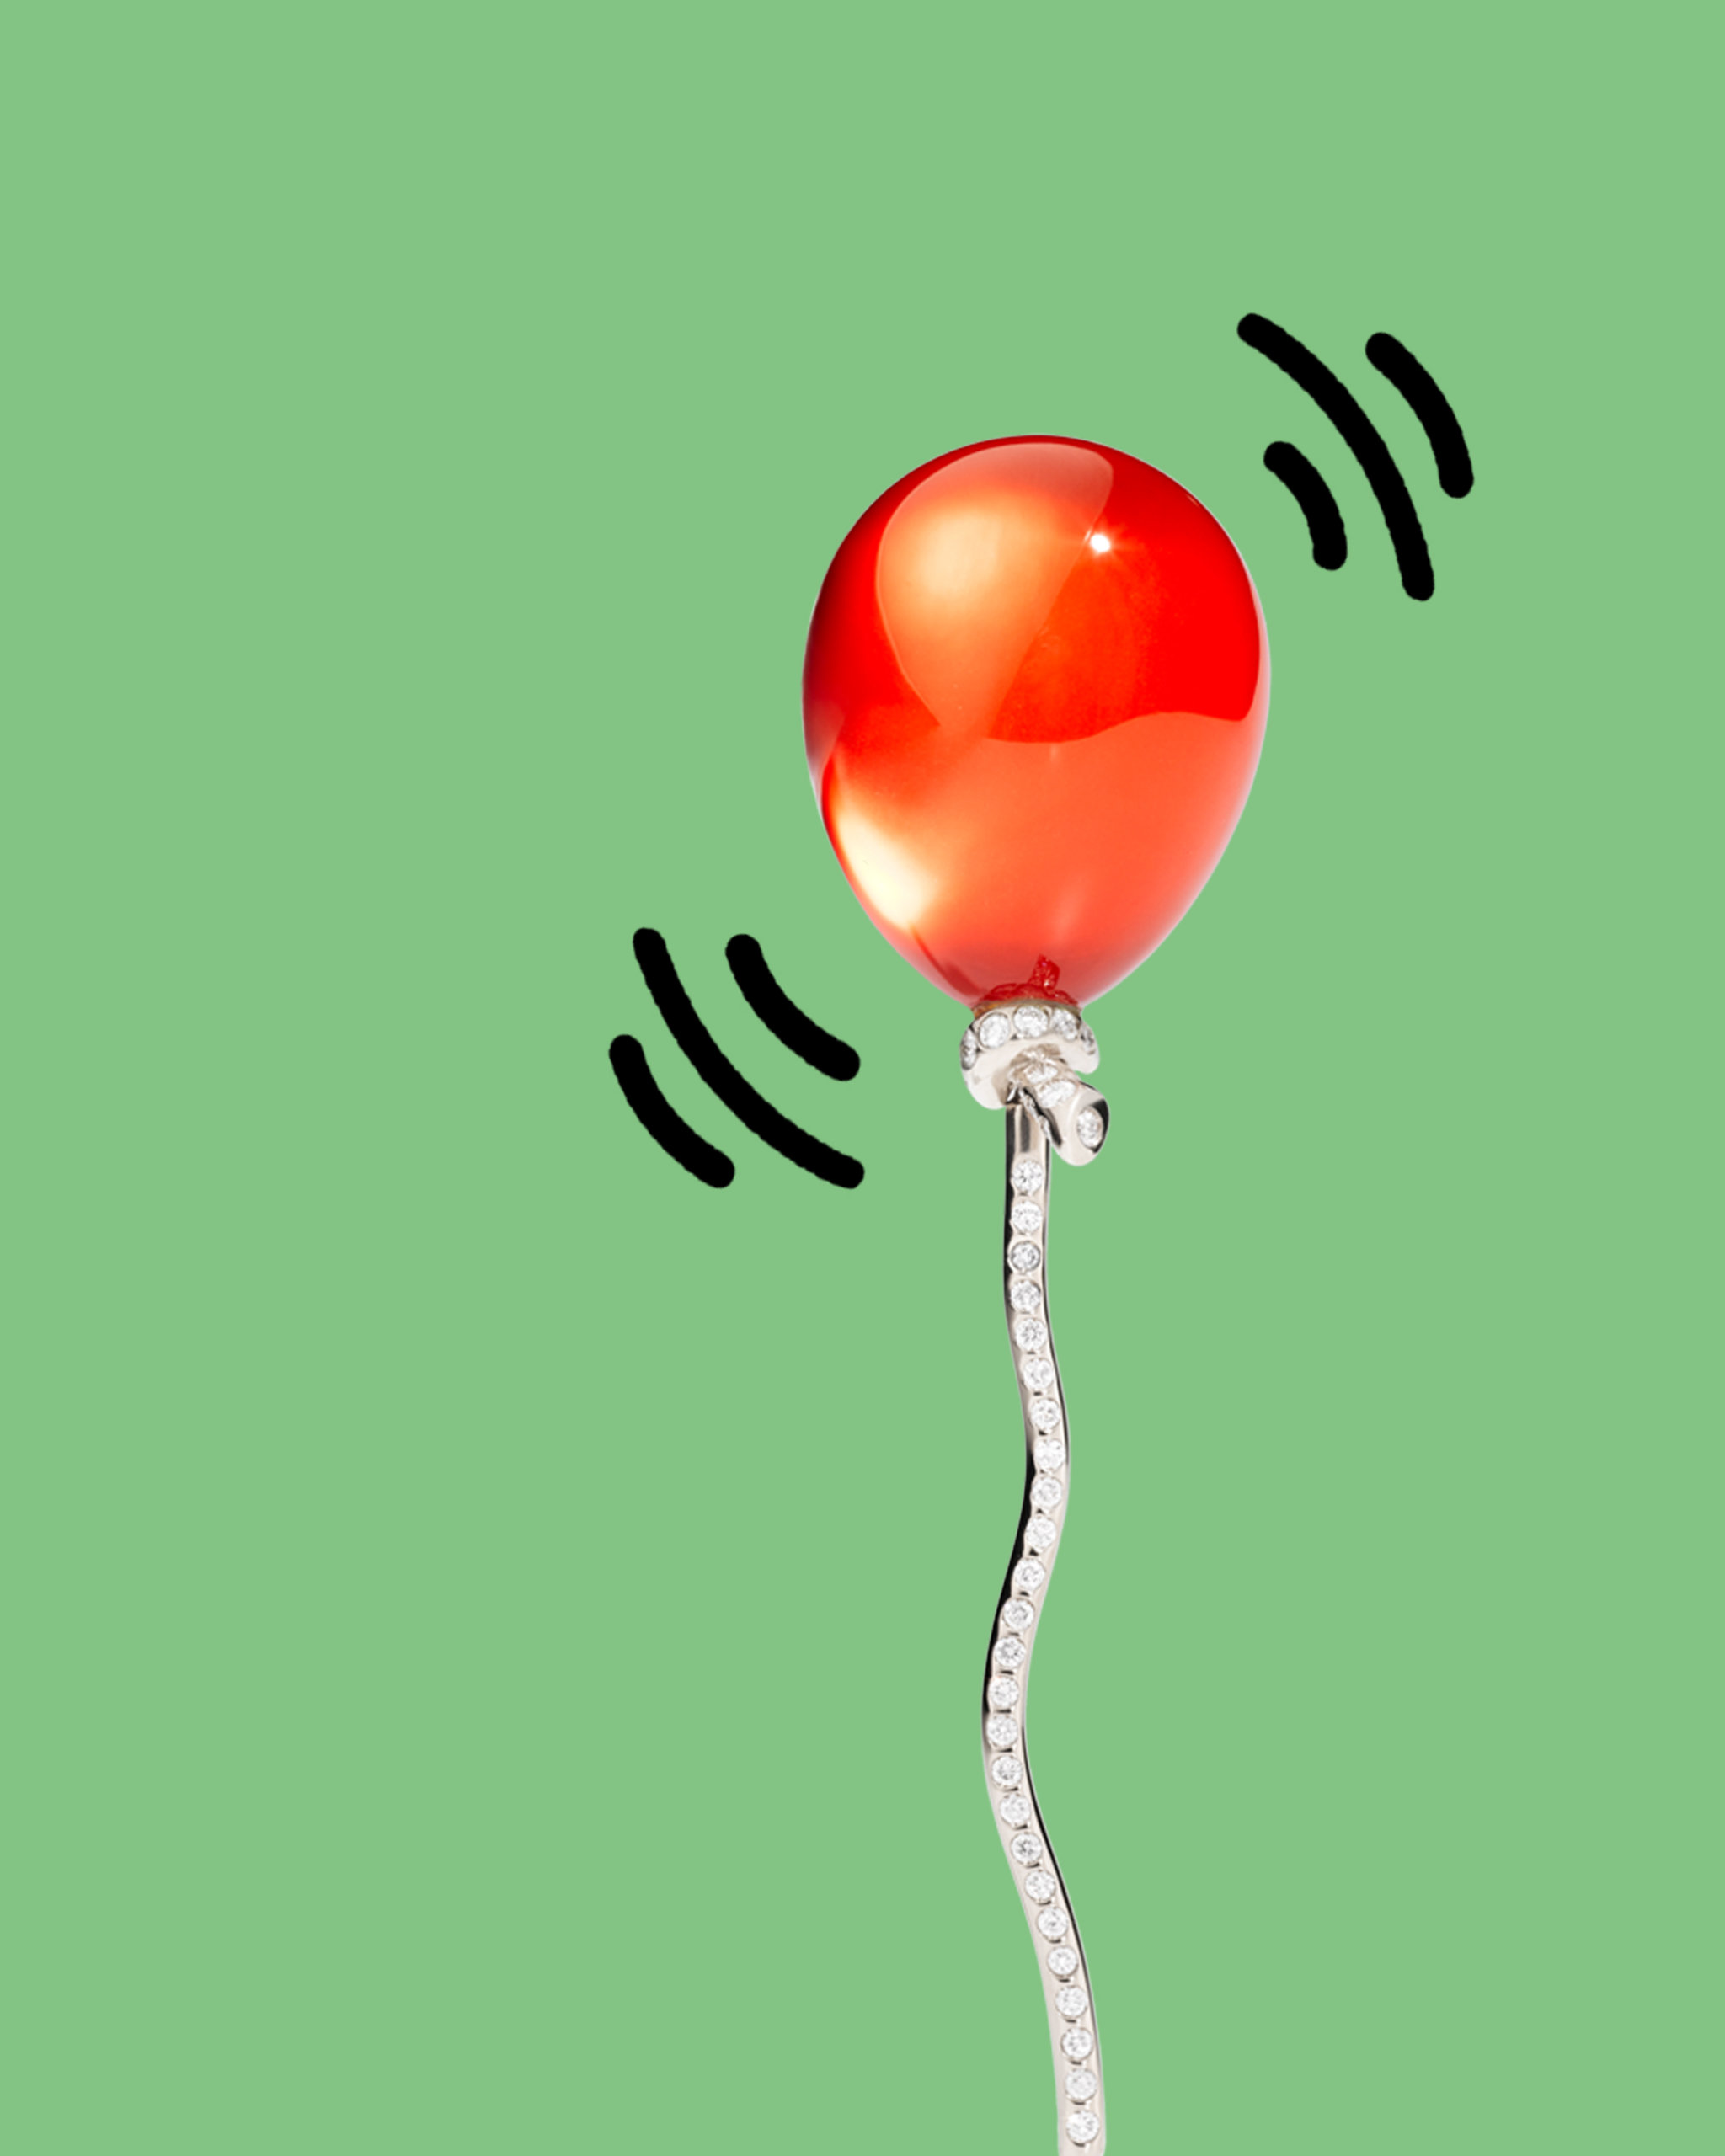 Pave diamond encrusted red balloon emoji pendant from Vhernier